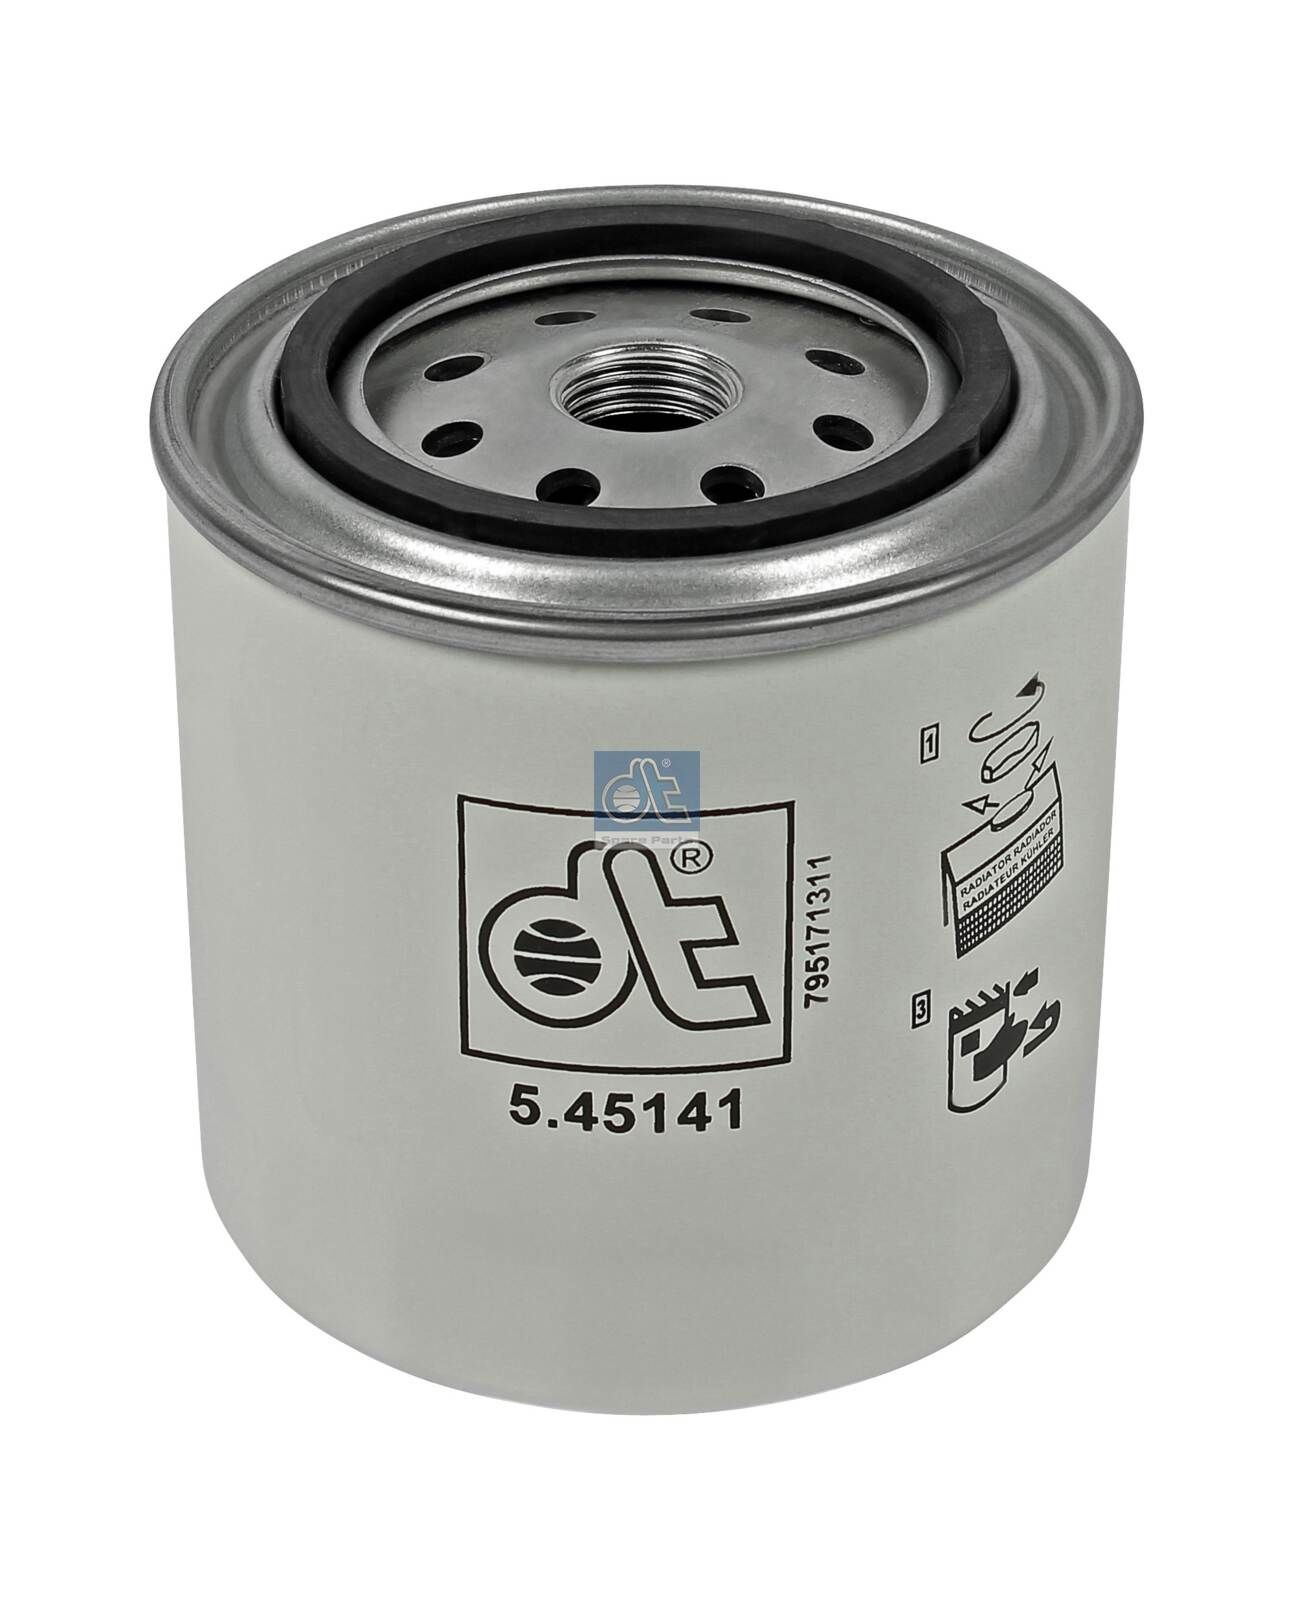 WA 940/1 DT Spare Parts 5.45141 Coolant Filter 7619 2222